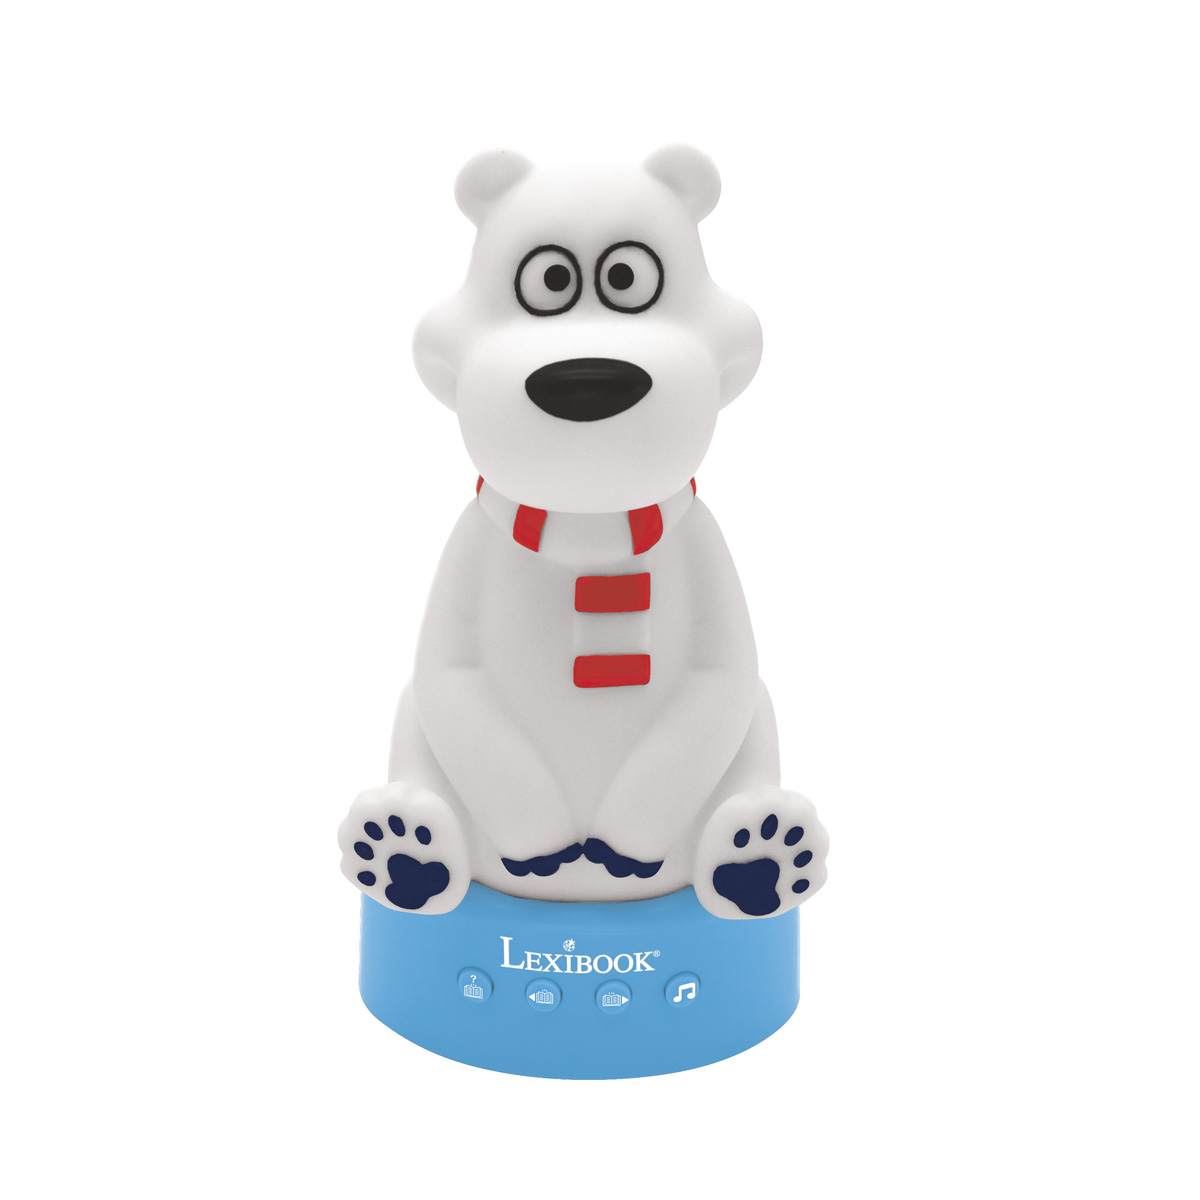 Geschichtenerzähler Geschichtenerzähler 3D (Deutsch) Polarbär LEXIBOOK